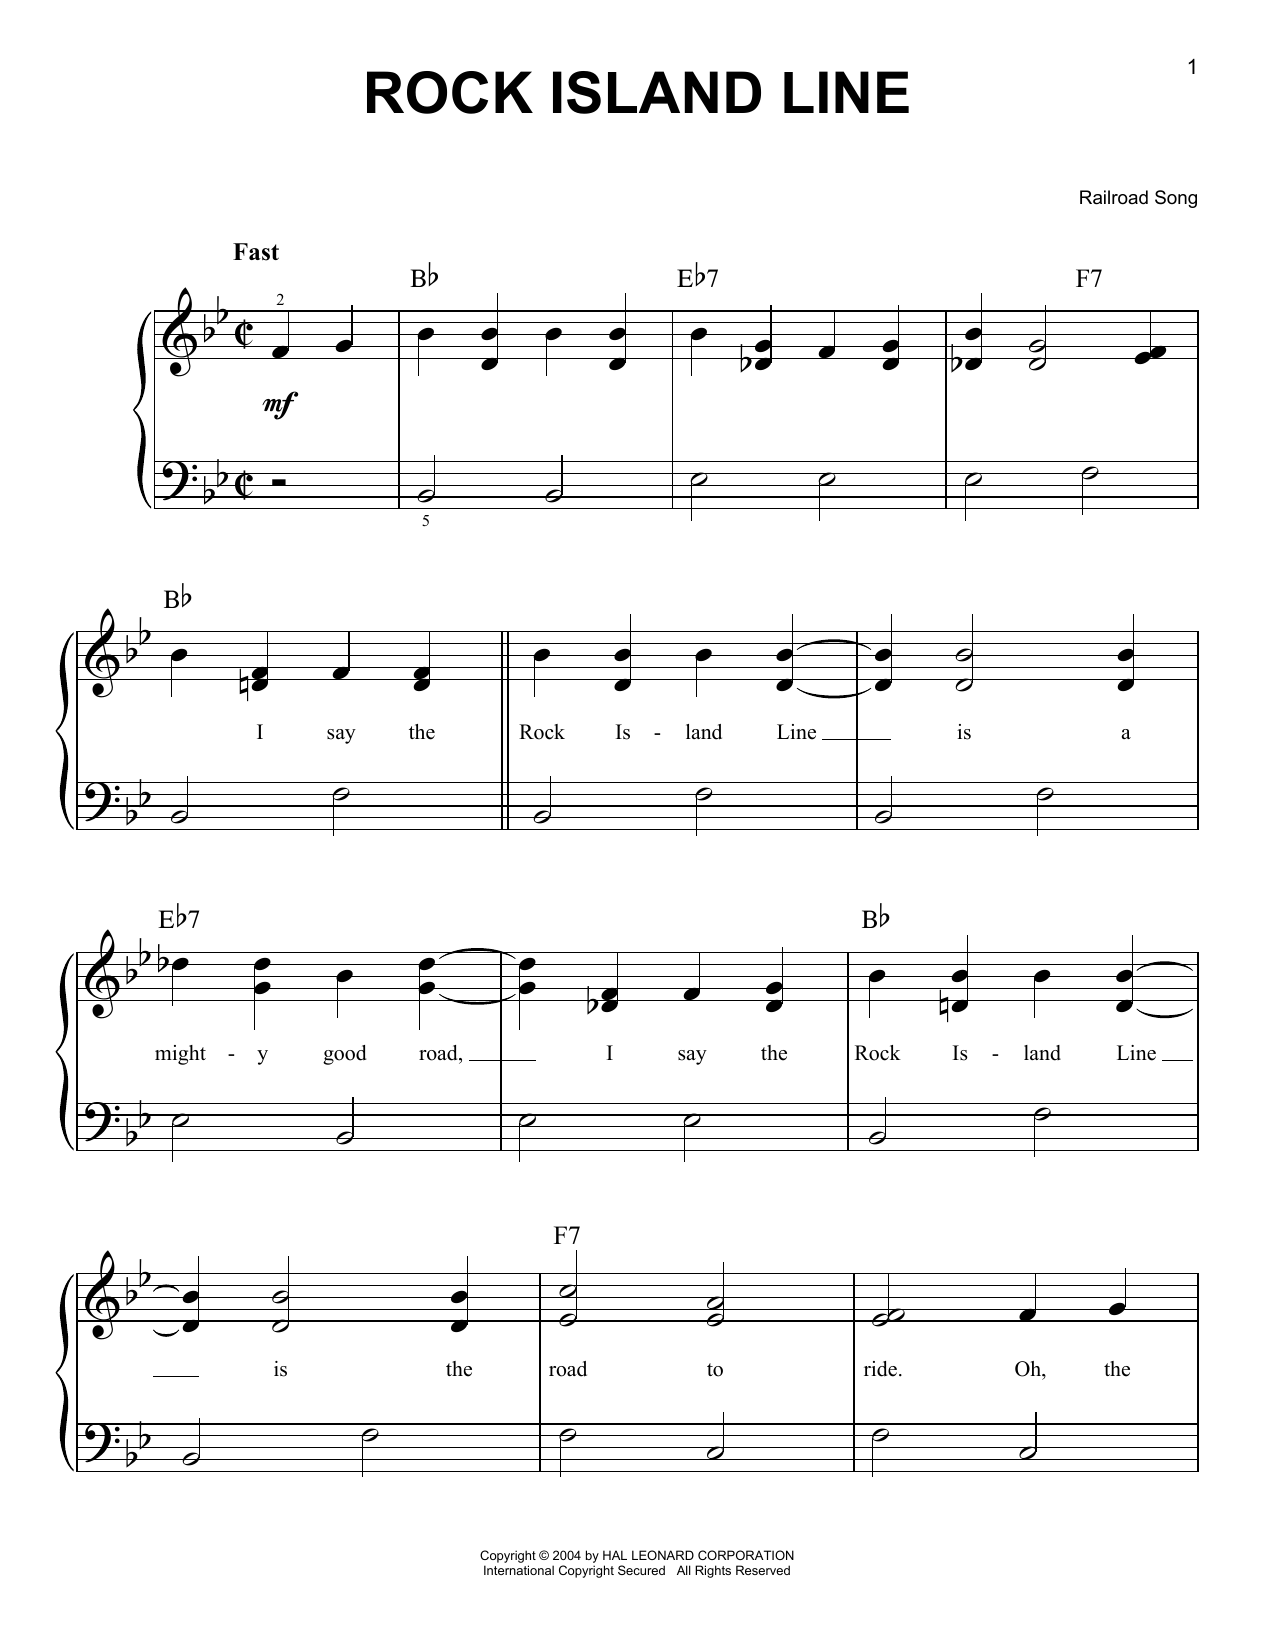 Railroad Song Rock Island Line Sheet Music Notes & Chords for Ukulele - Download or Print PDF